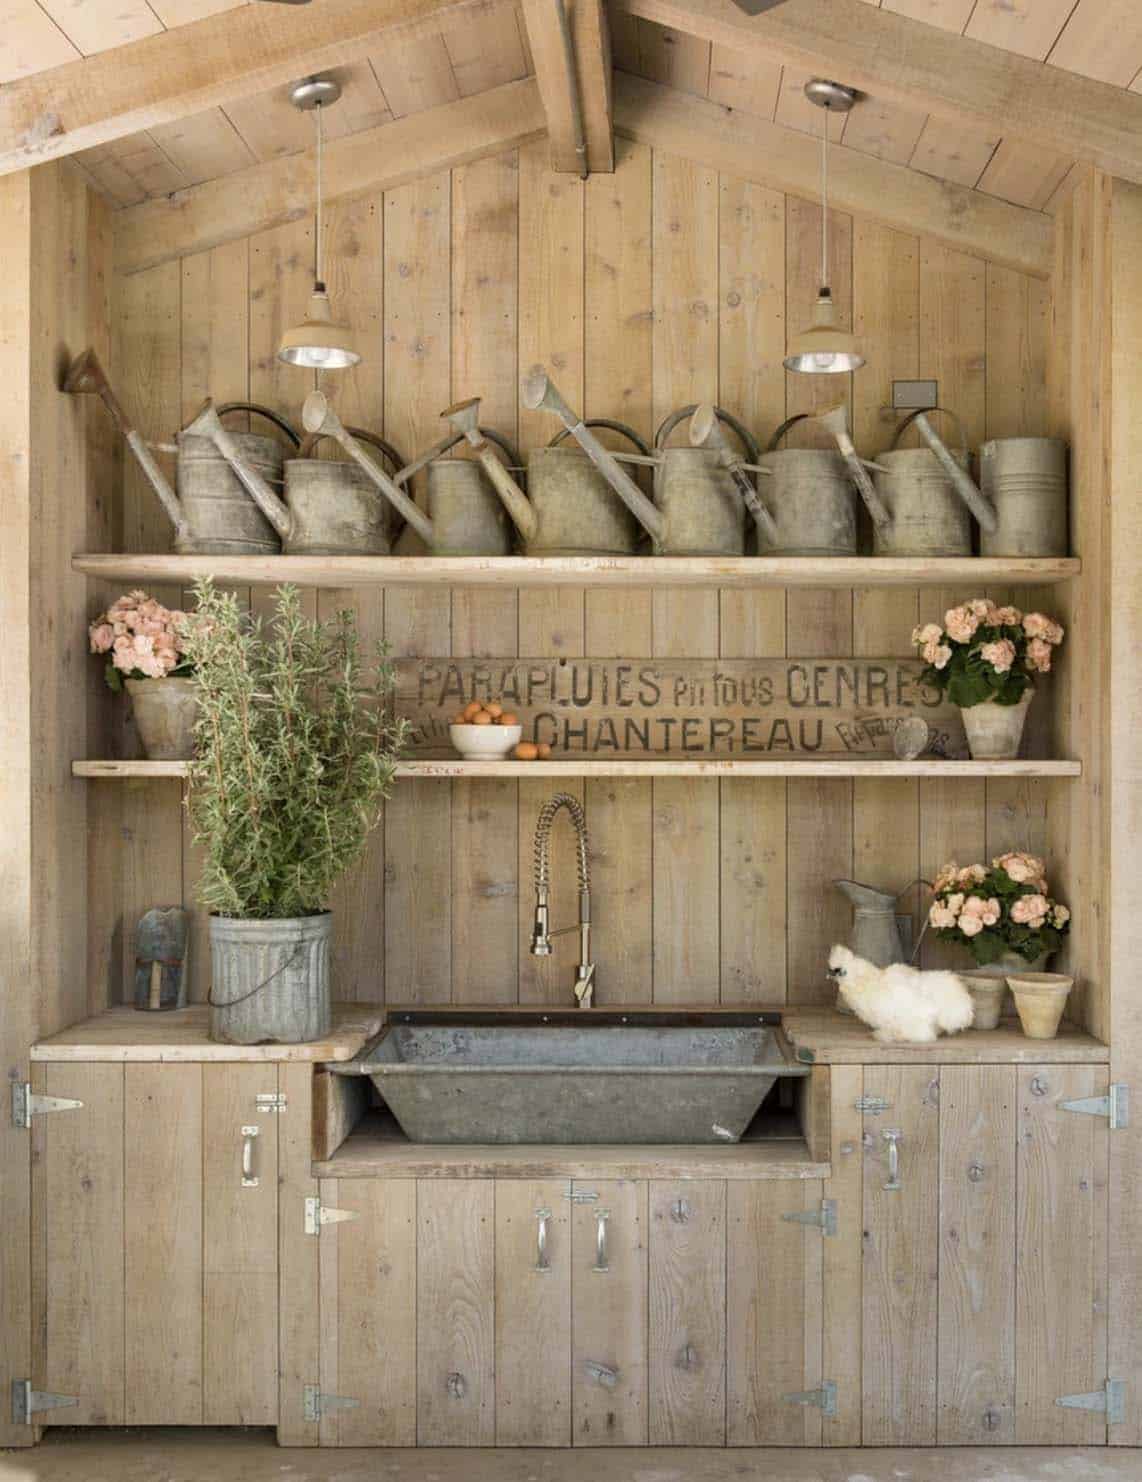 European-inspired potting shed sink